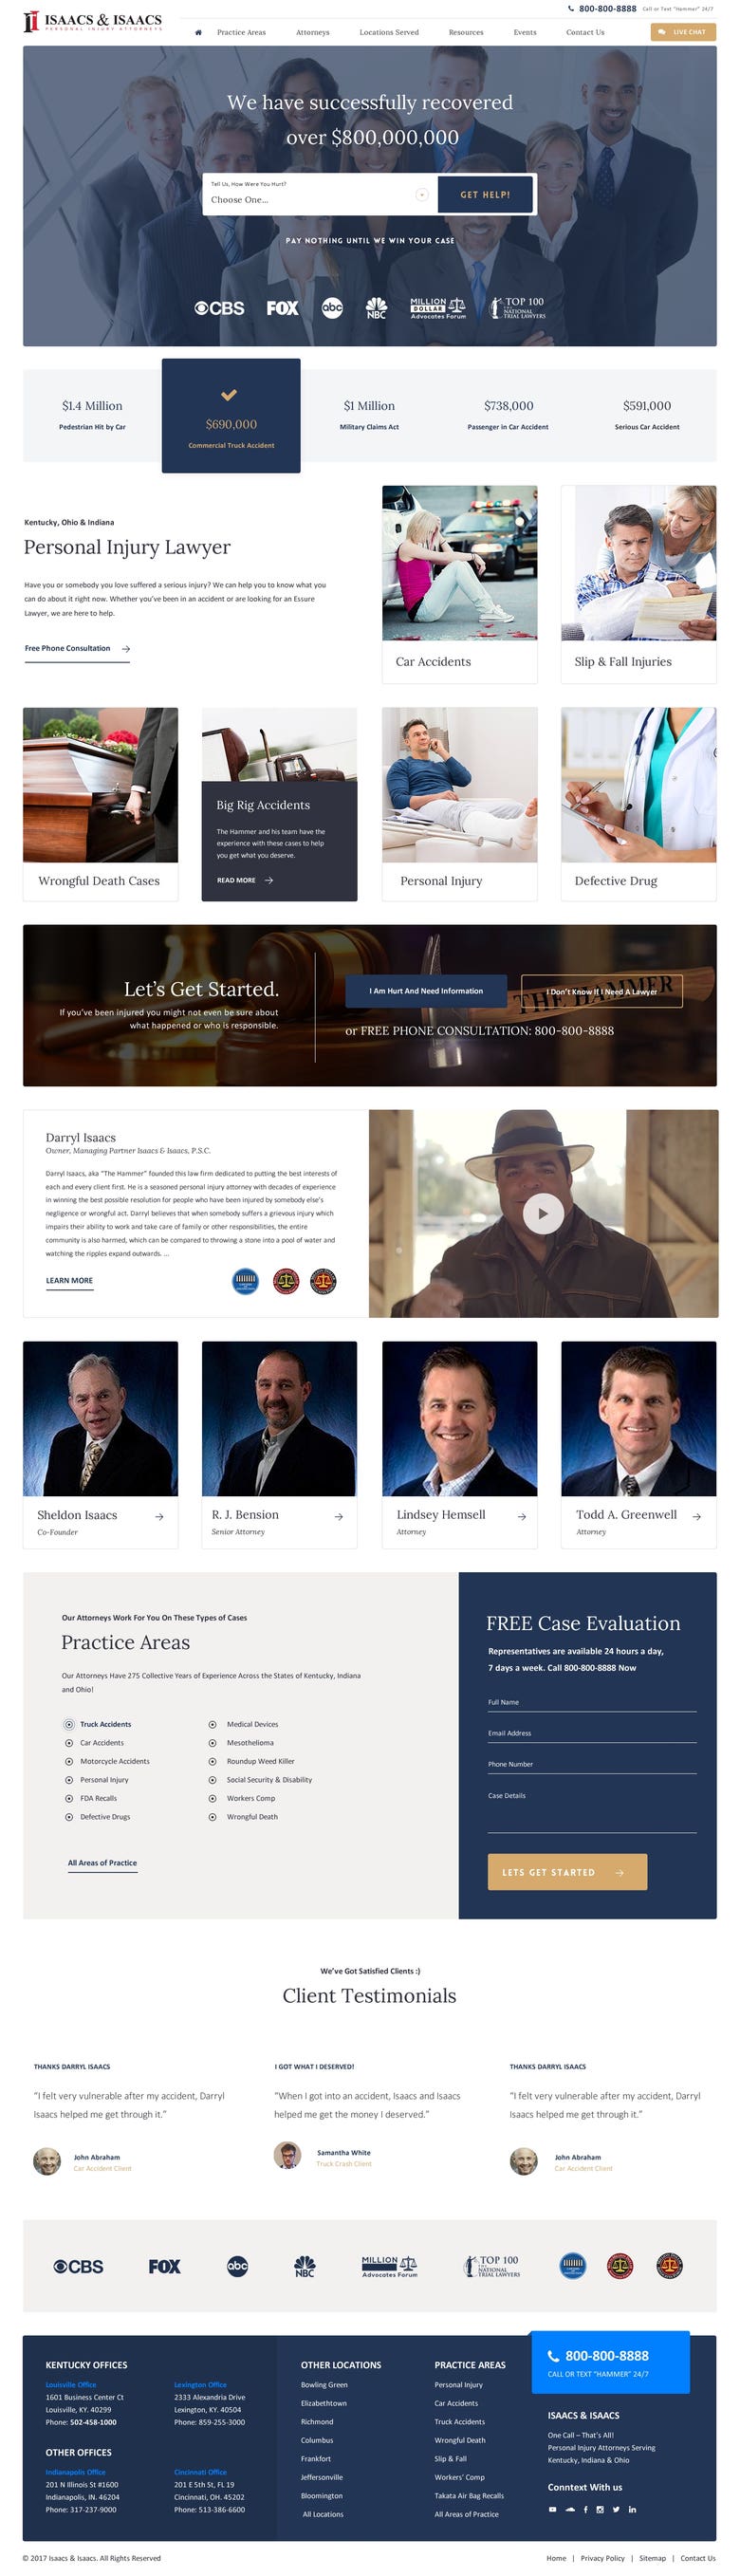 Isaacs & Isaacs law firm website